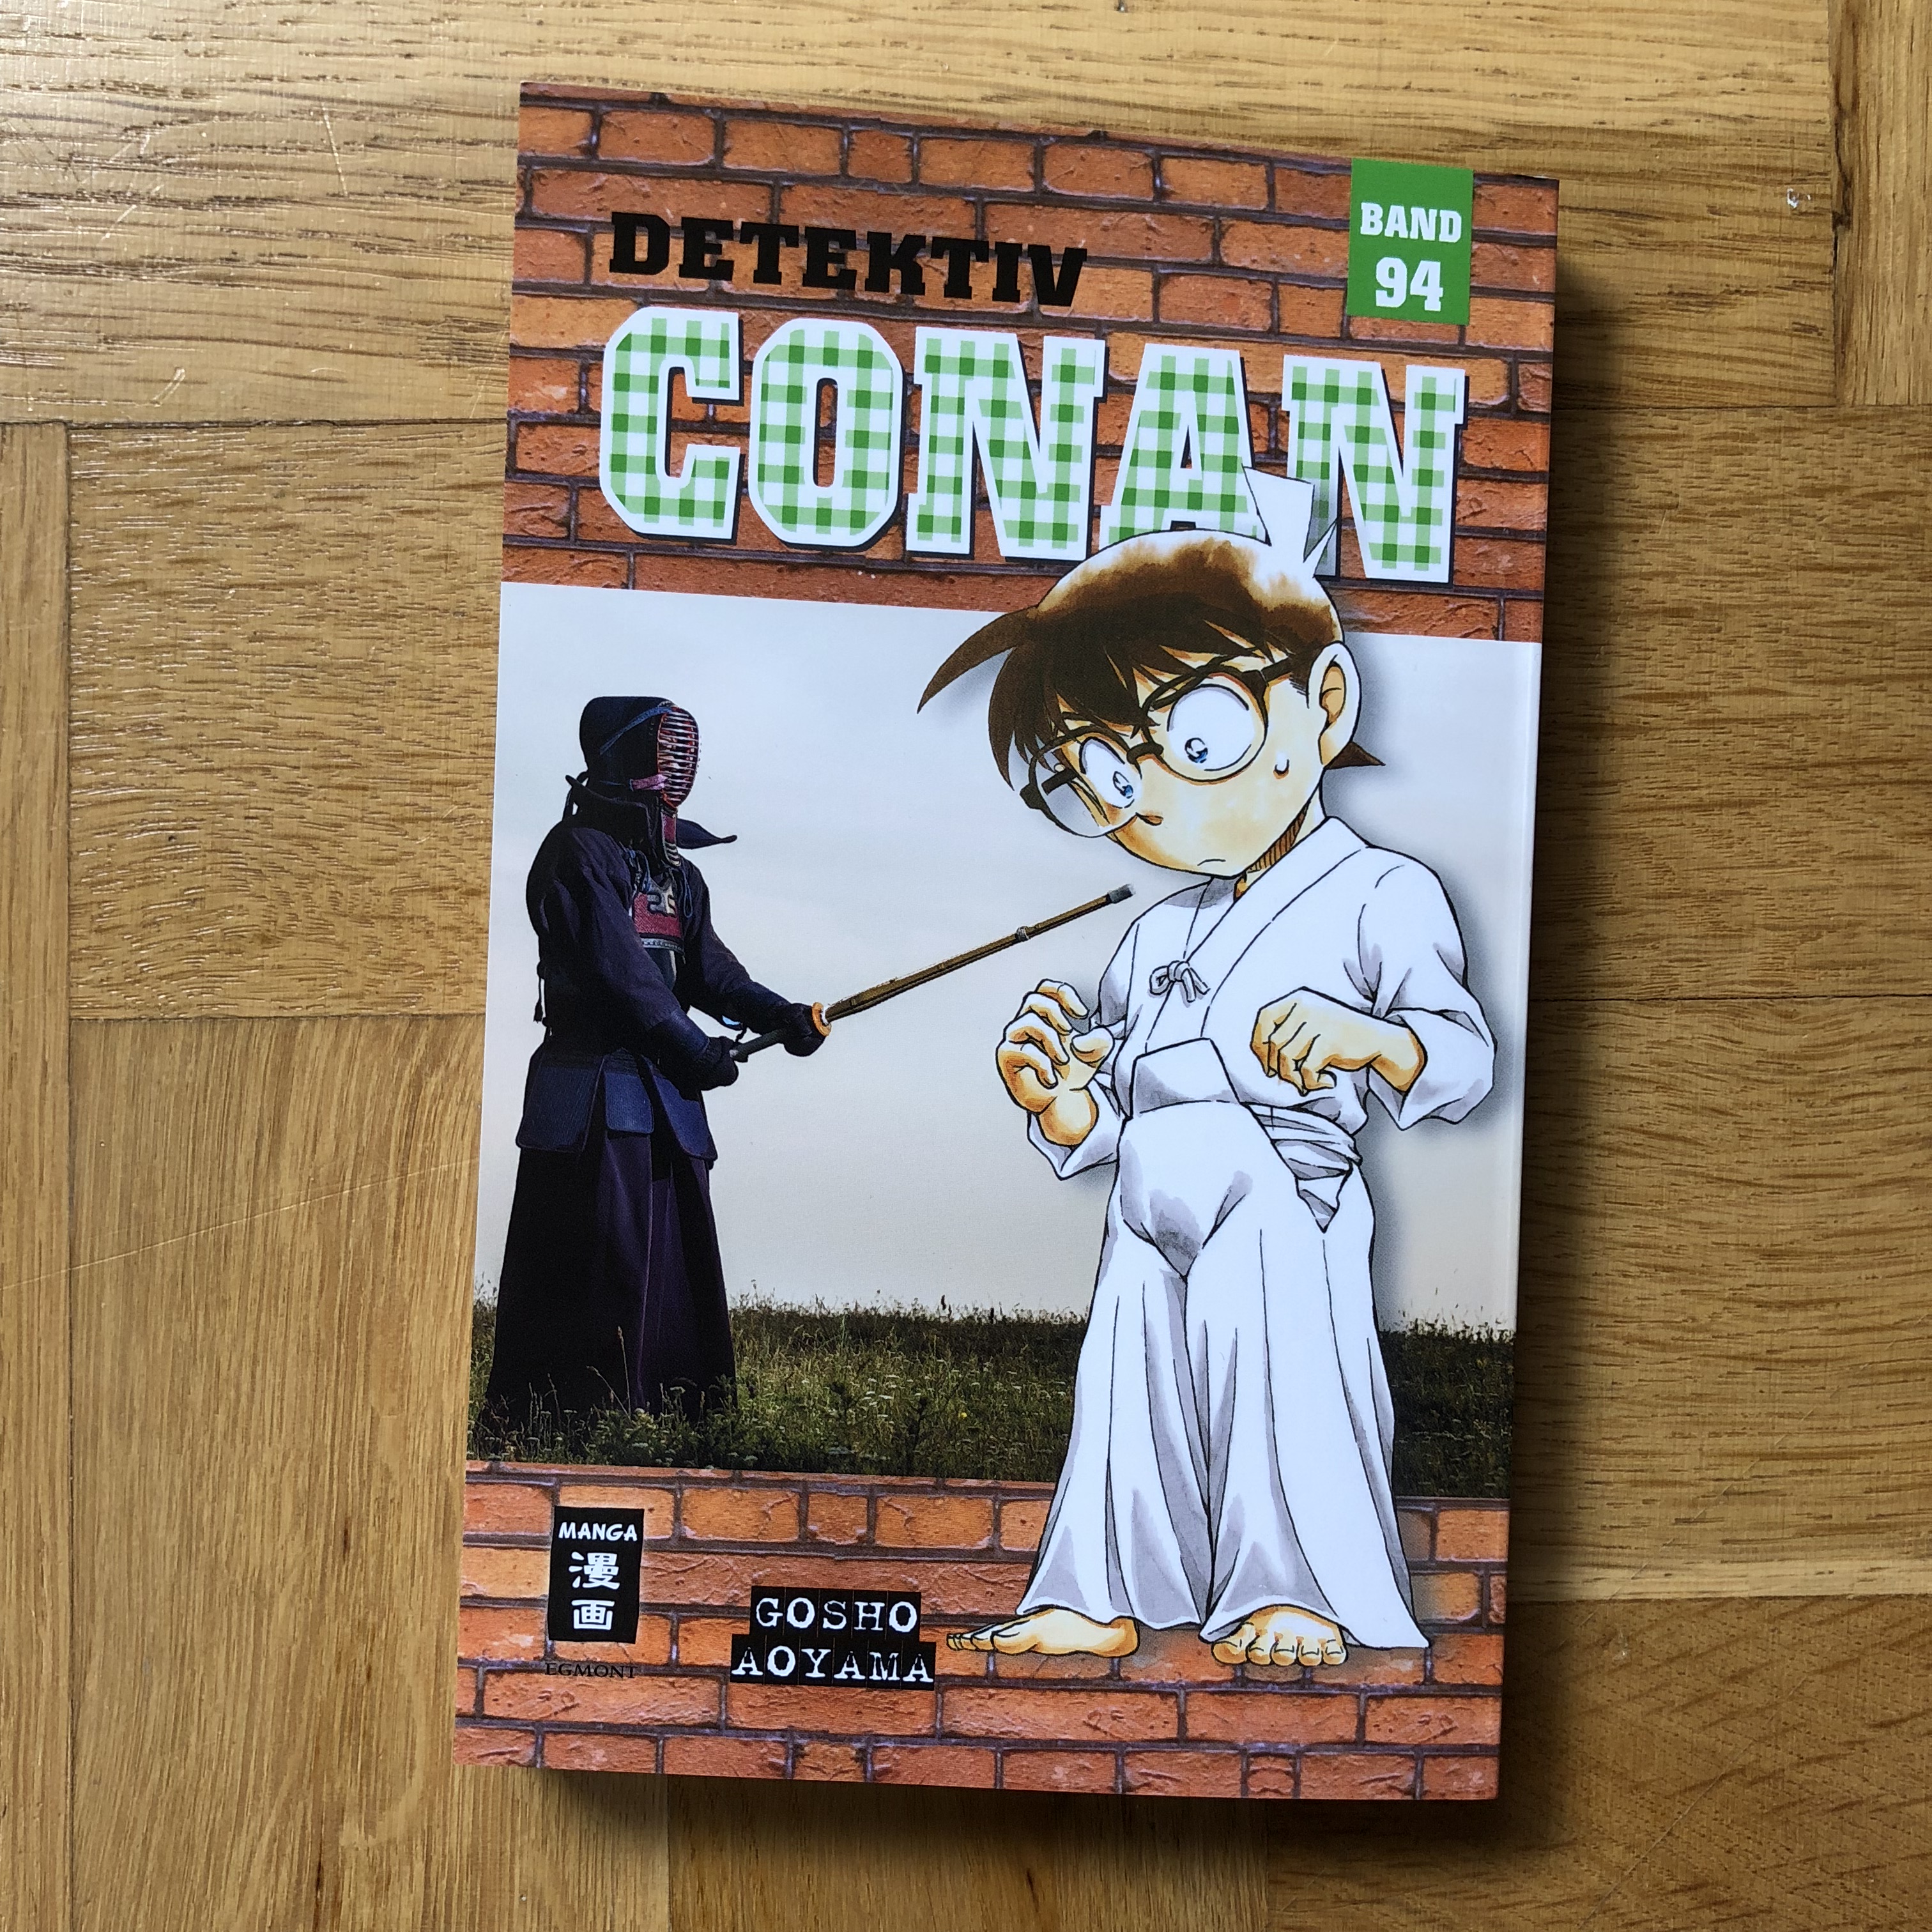 Detektiv Conan News